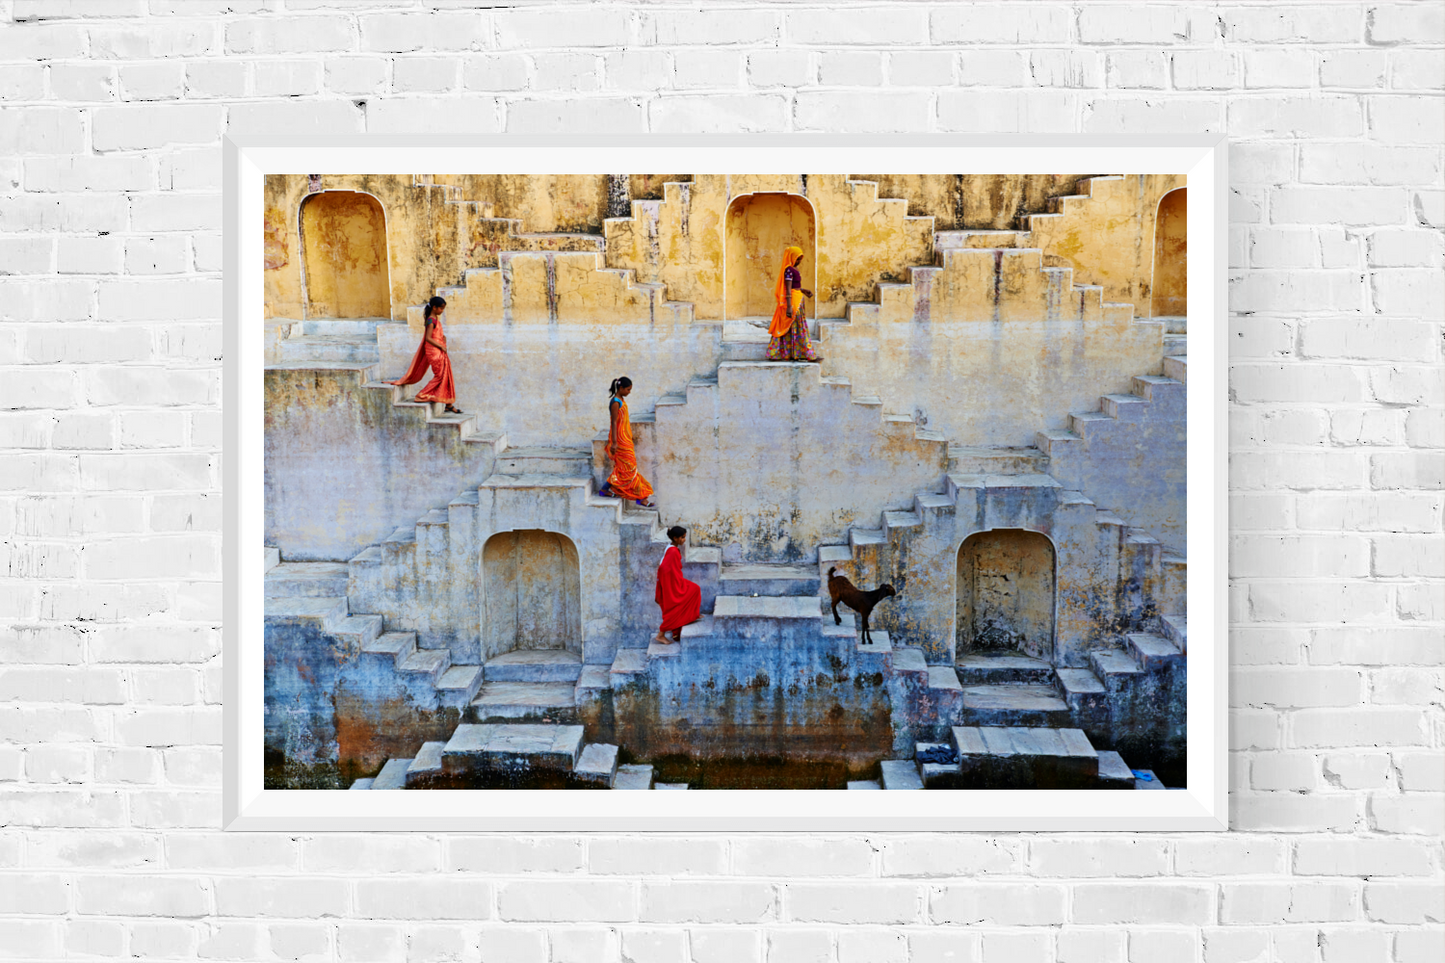 Jaipur, India by Tuul and Bruno Morandi